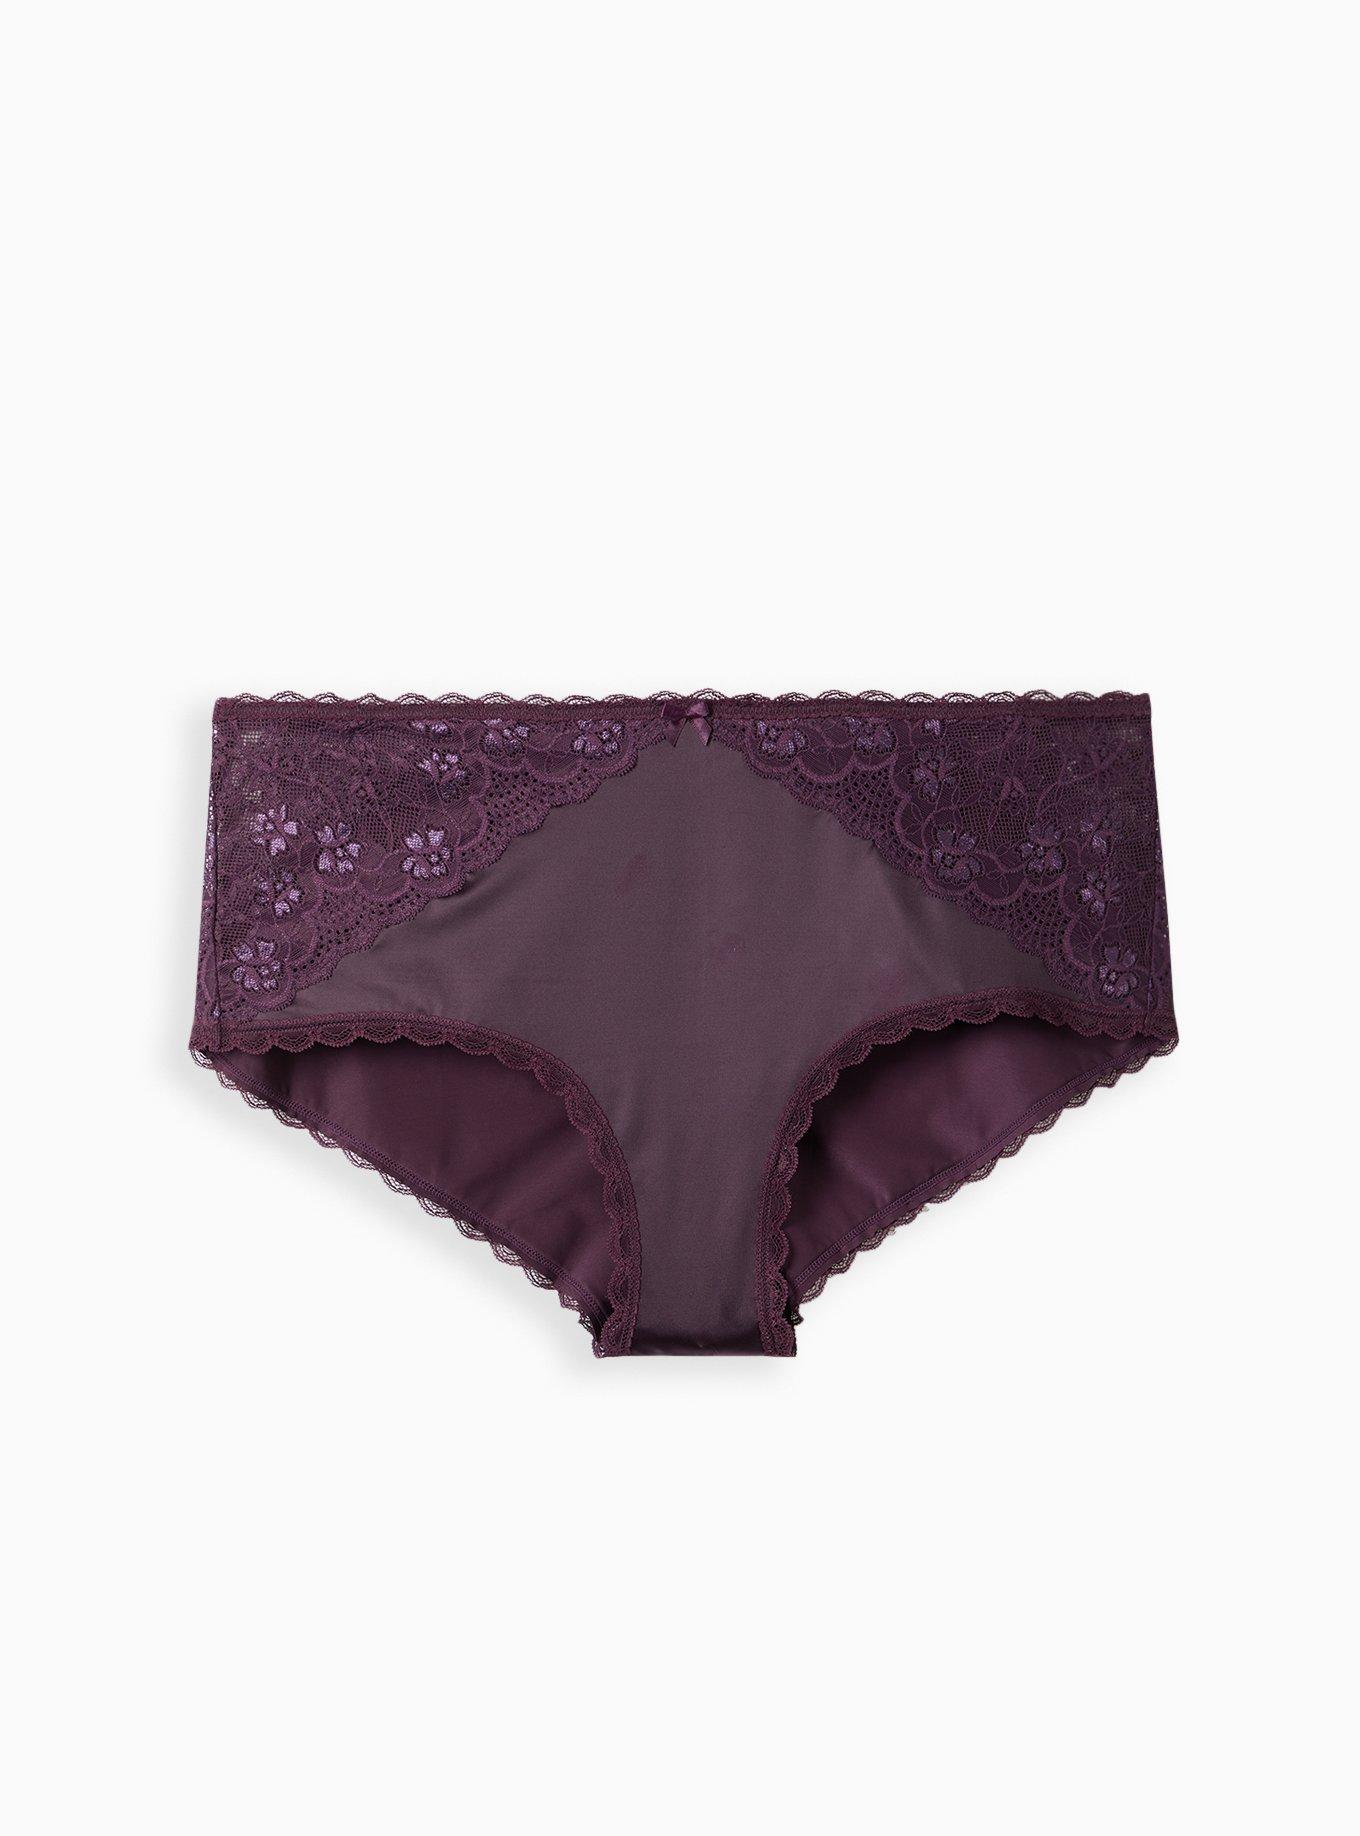 FaroLy Women Sexy Lace Satin Plus Size Panties Mid Waist